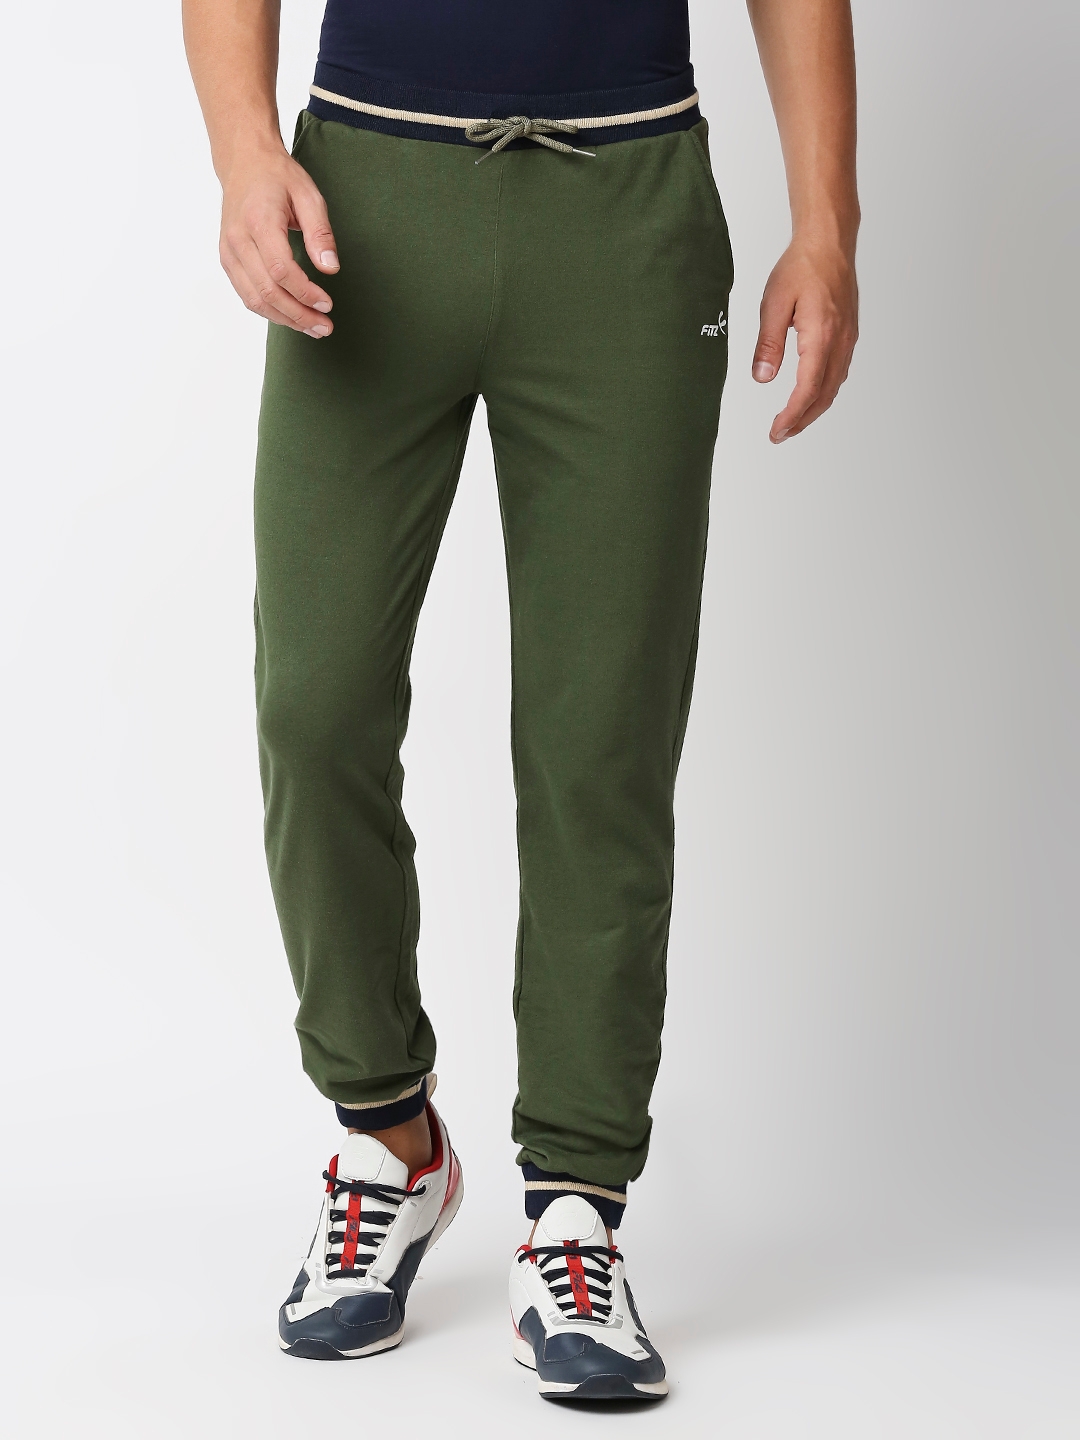 FITZ | Men's Slim Fit Green Cotton Blend Casual Joogers